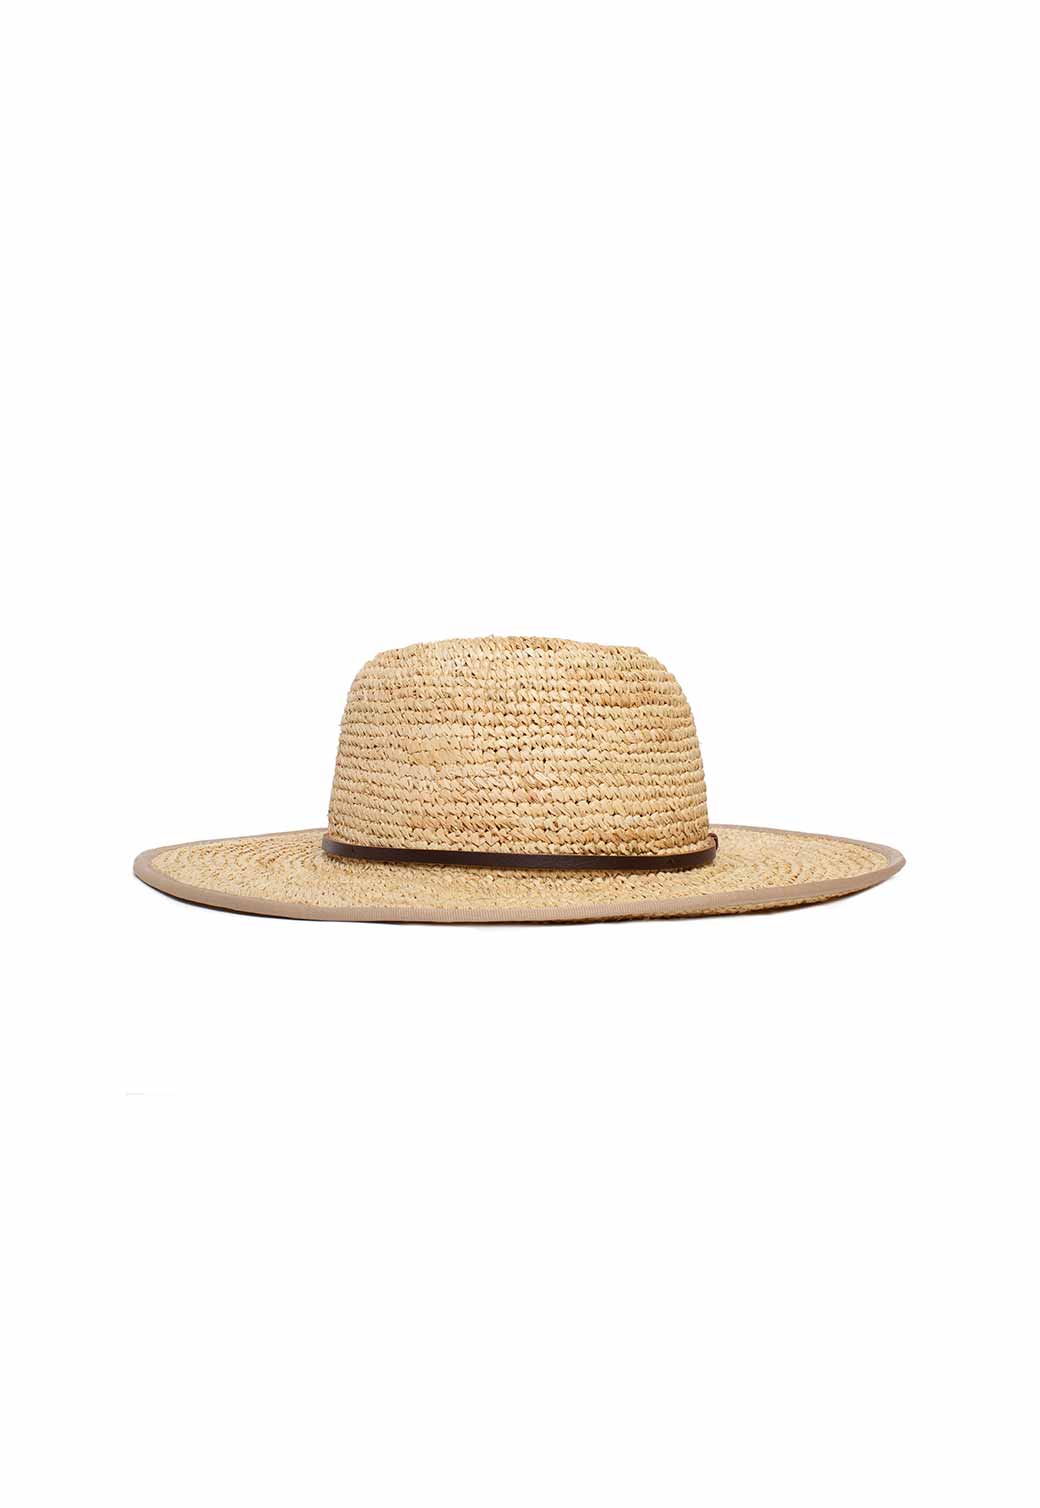 Tan כובע קש רחב שוליים Desert Sun GOORIN